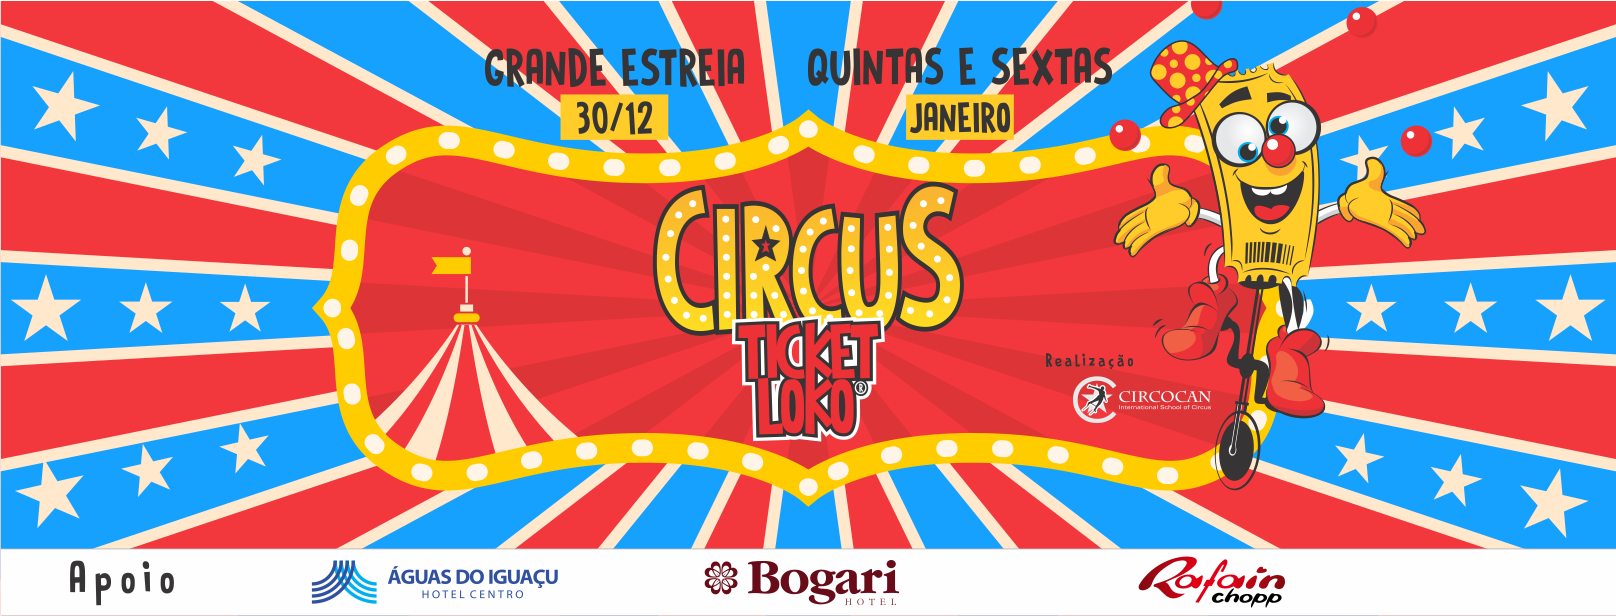 circus-ticket-loko-capa-facebook